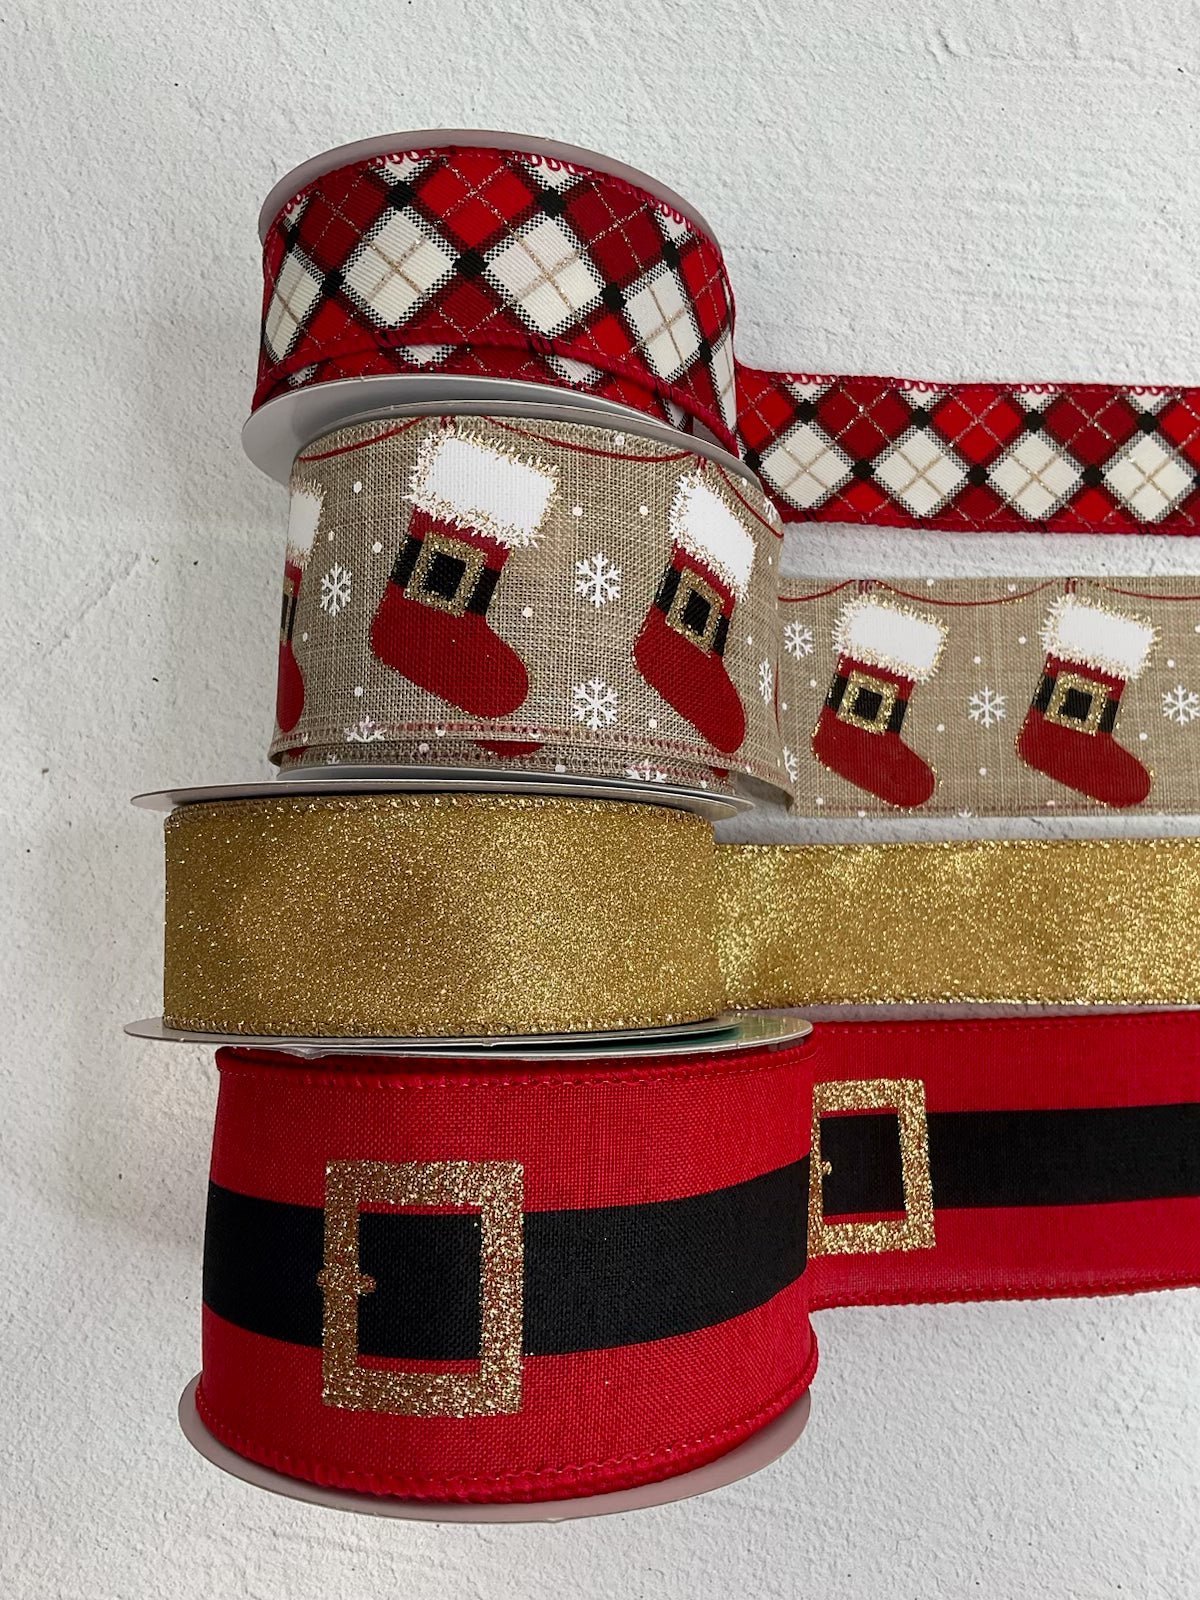 Christmas Santa belt x 4 ribbon bow bundle - Greenery MarketWired ribbon